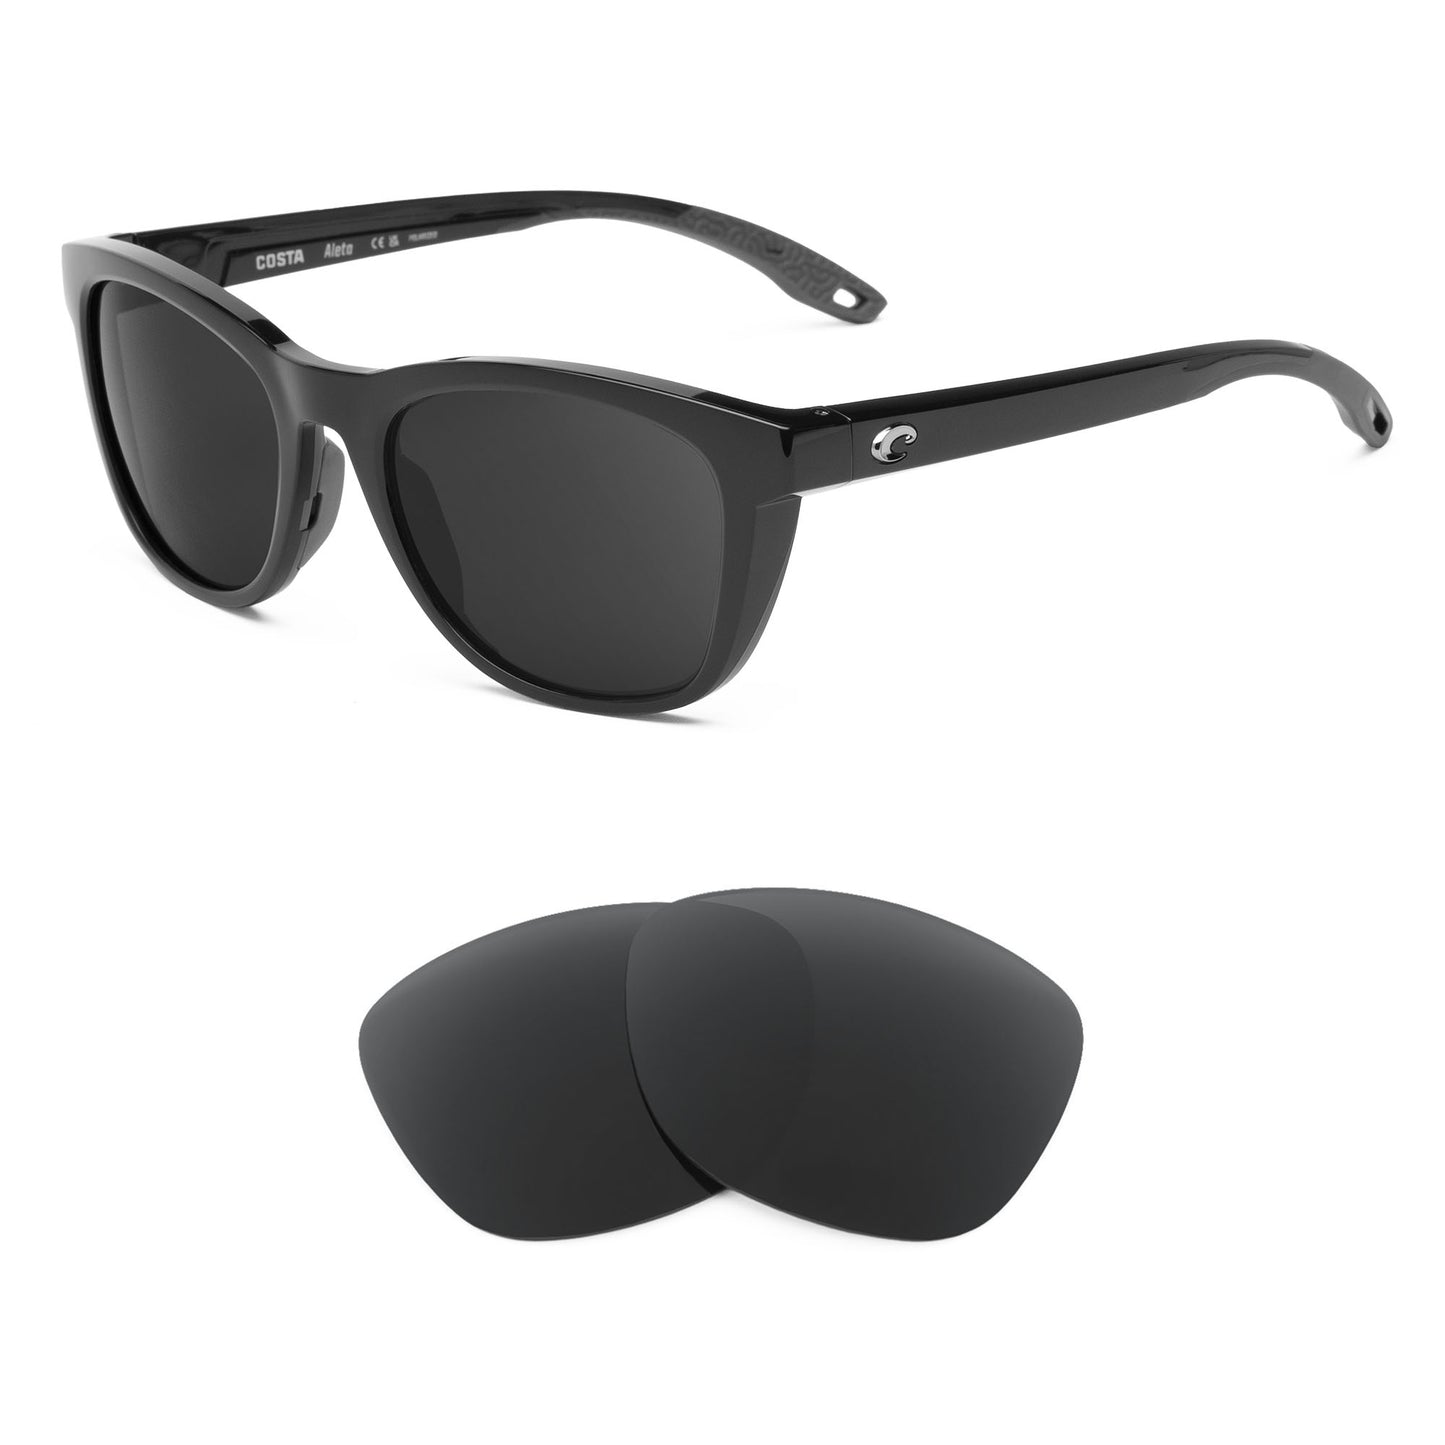 Costa Aleta sunglasses with replacement lenses